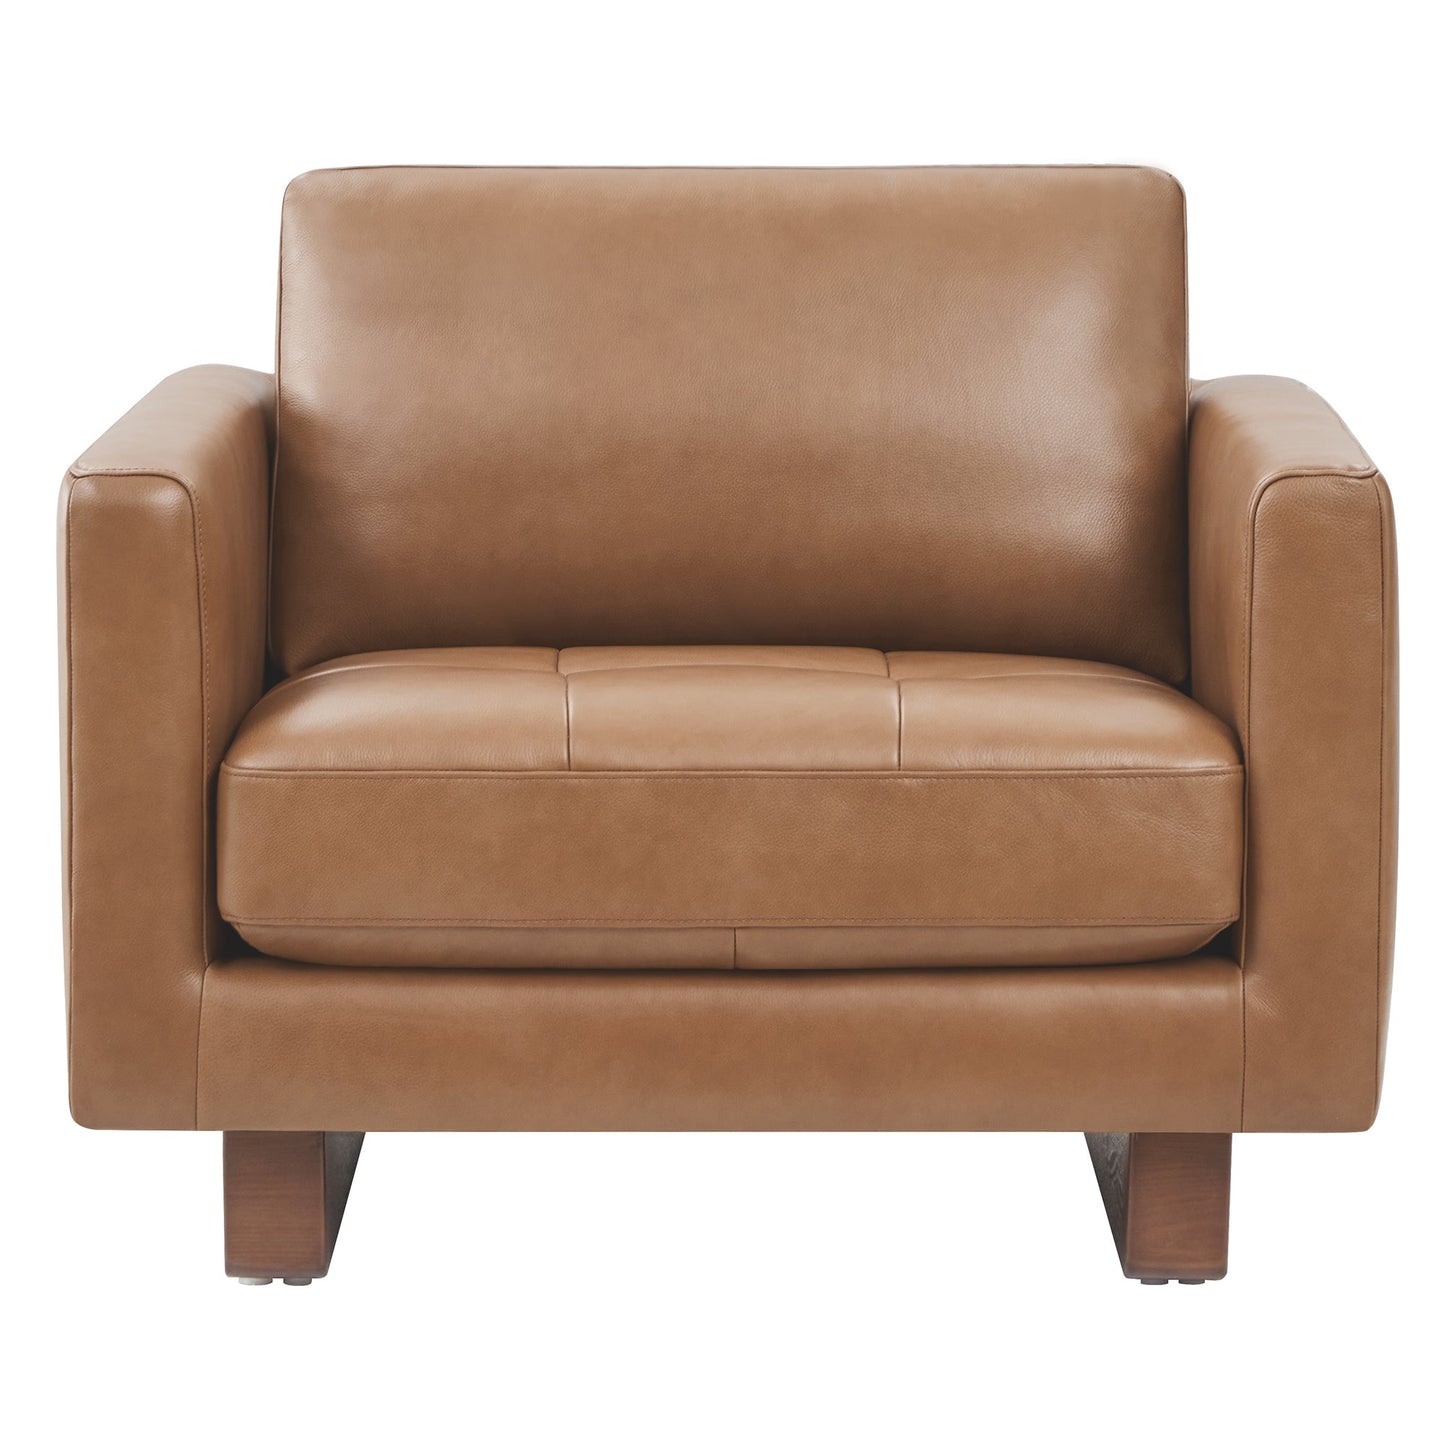 CHITA LIVING-Senan Mid-Century Modern Genunie Leather Armchair-Accent Chair-Genuine Top-grain Leather-Chair with Wood Legs-